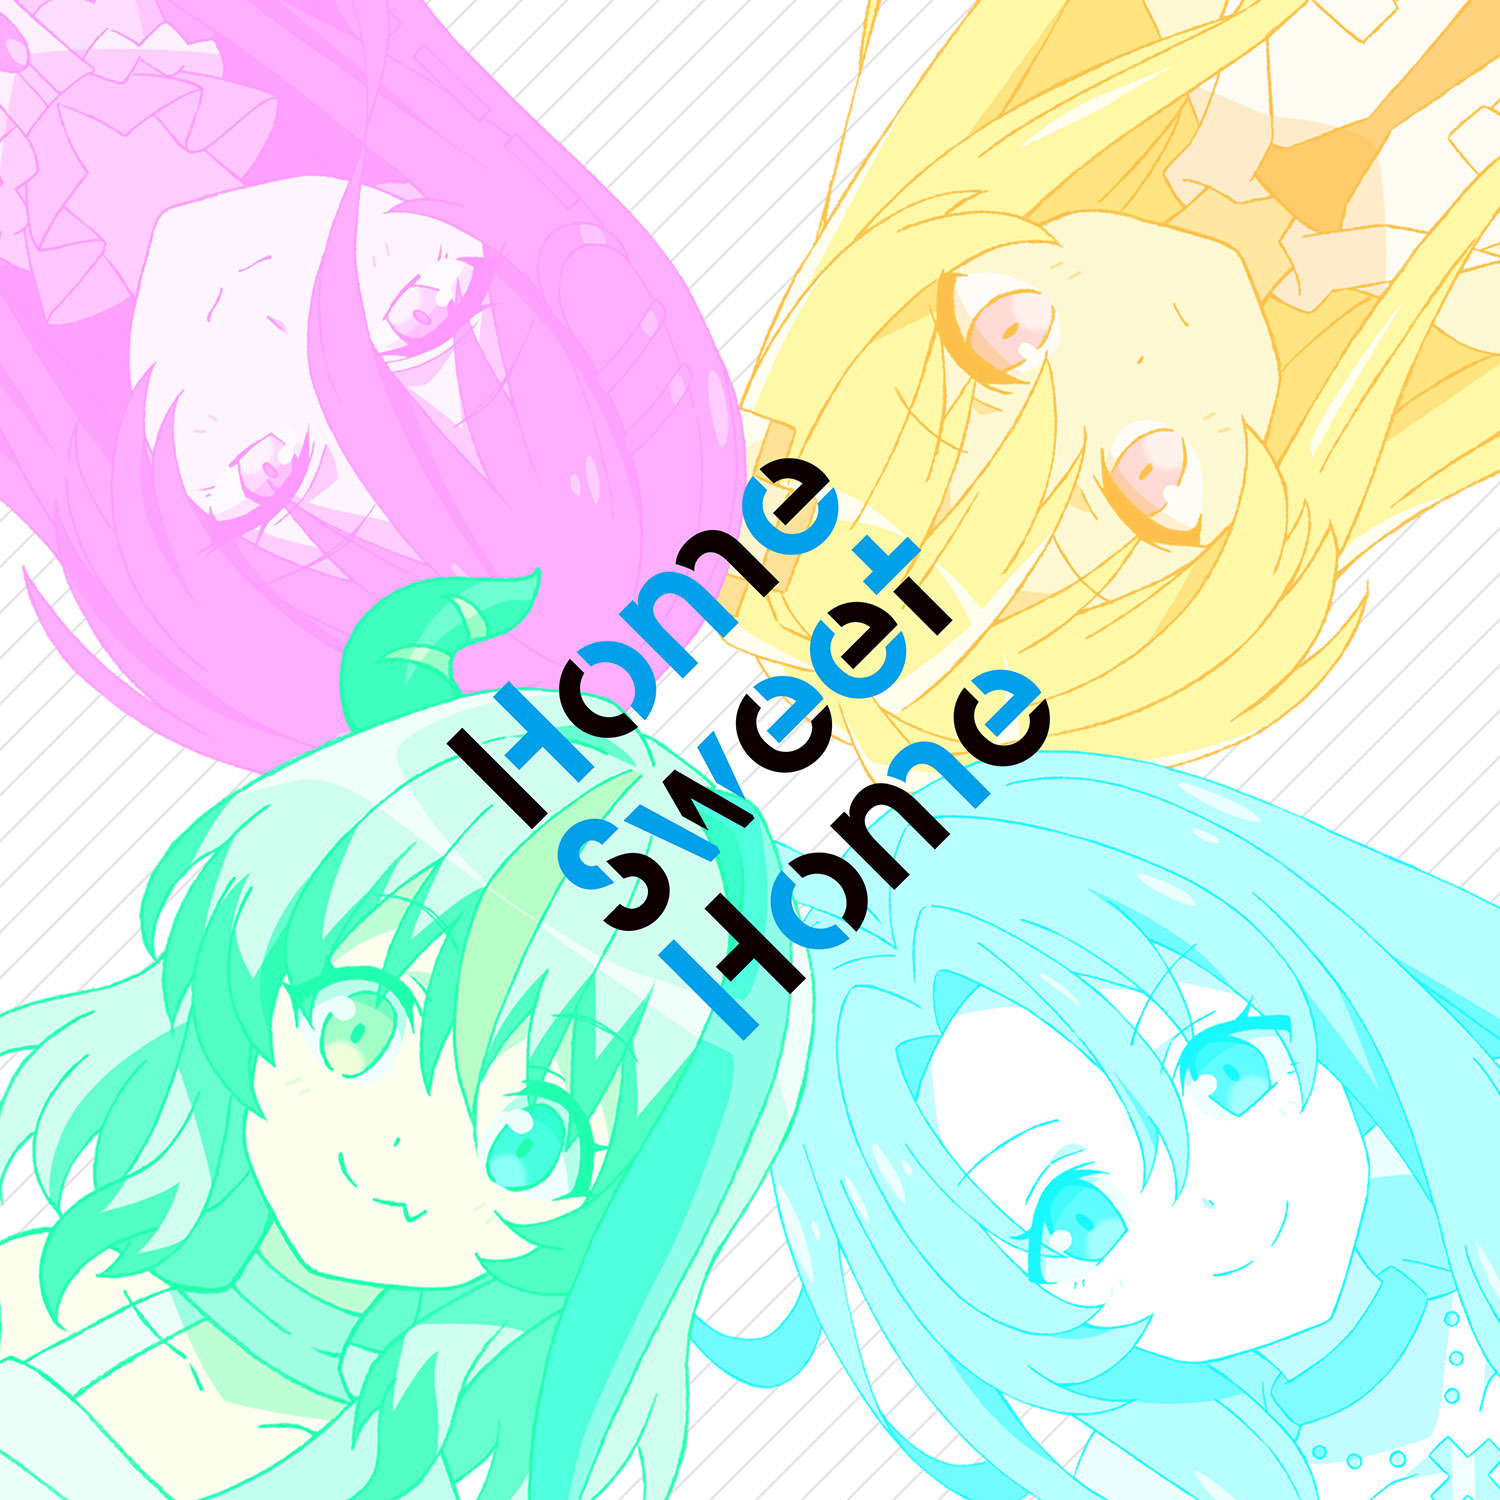 「Home Sweet Home」ジャケット (C)2021 暁なつめ, カカオ・ランタン／KADOKAWA／「戦闘員、 派遣します！」製作委員会